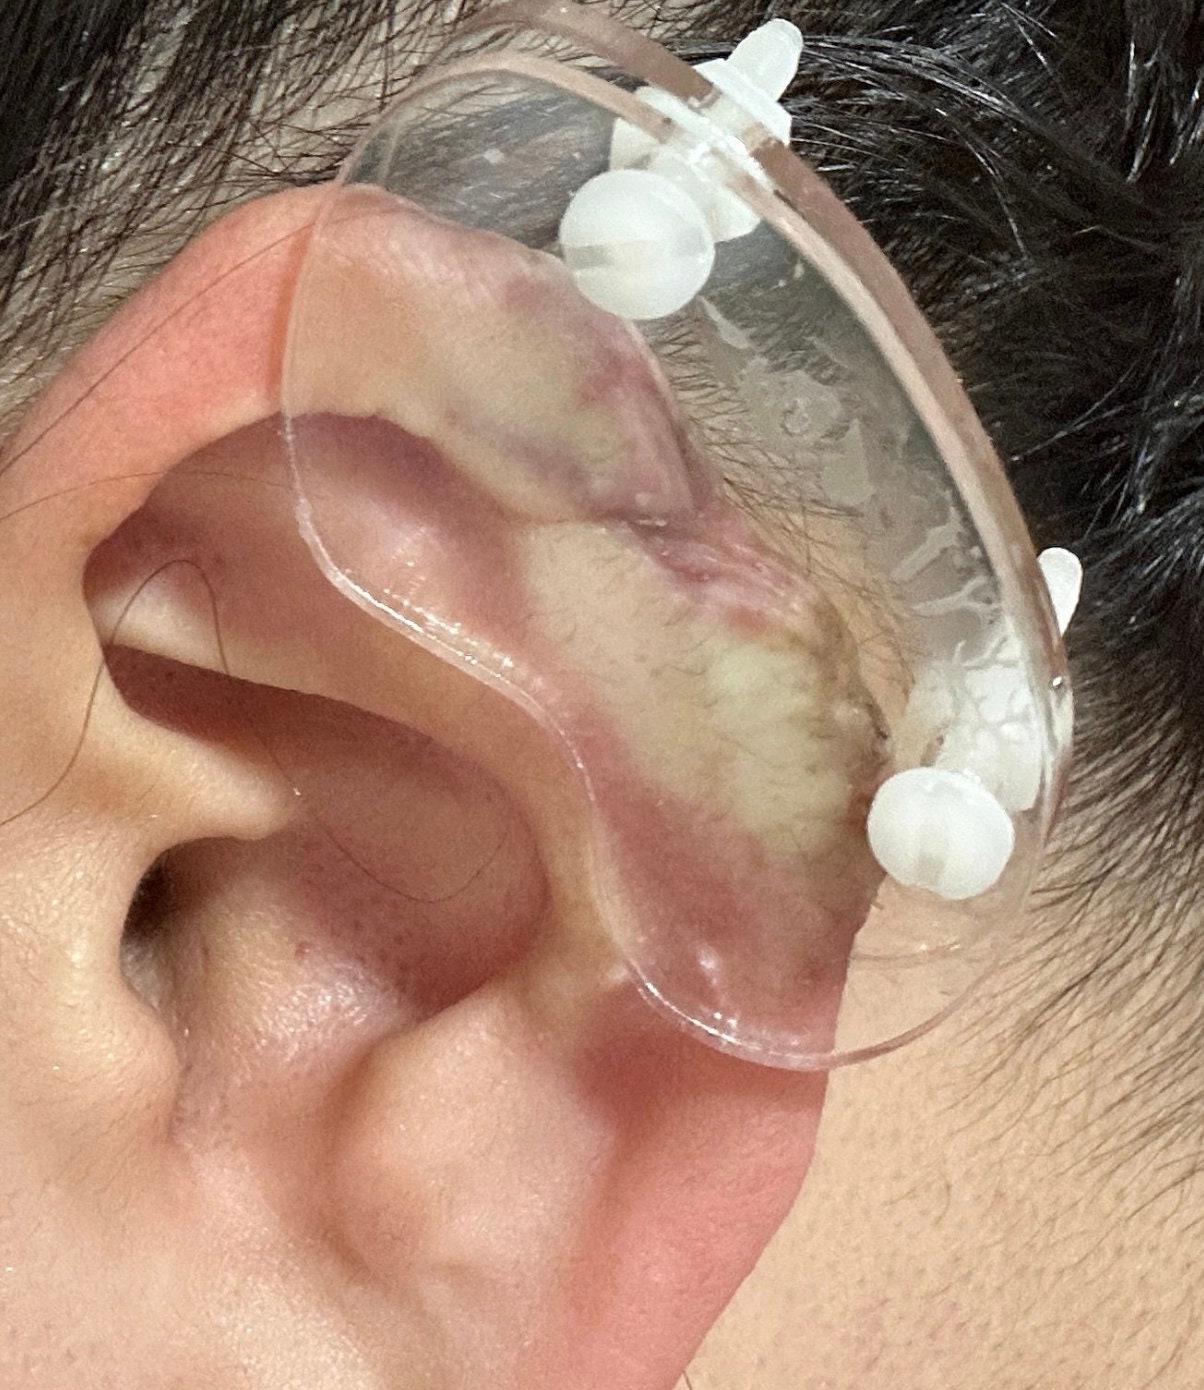 Ear Keloid Compression Plastic Discs Plastic Disc Earring for Post